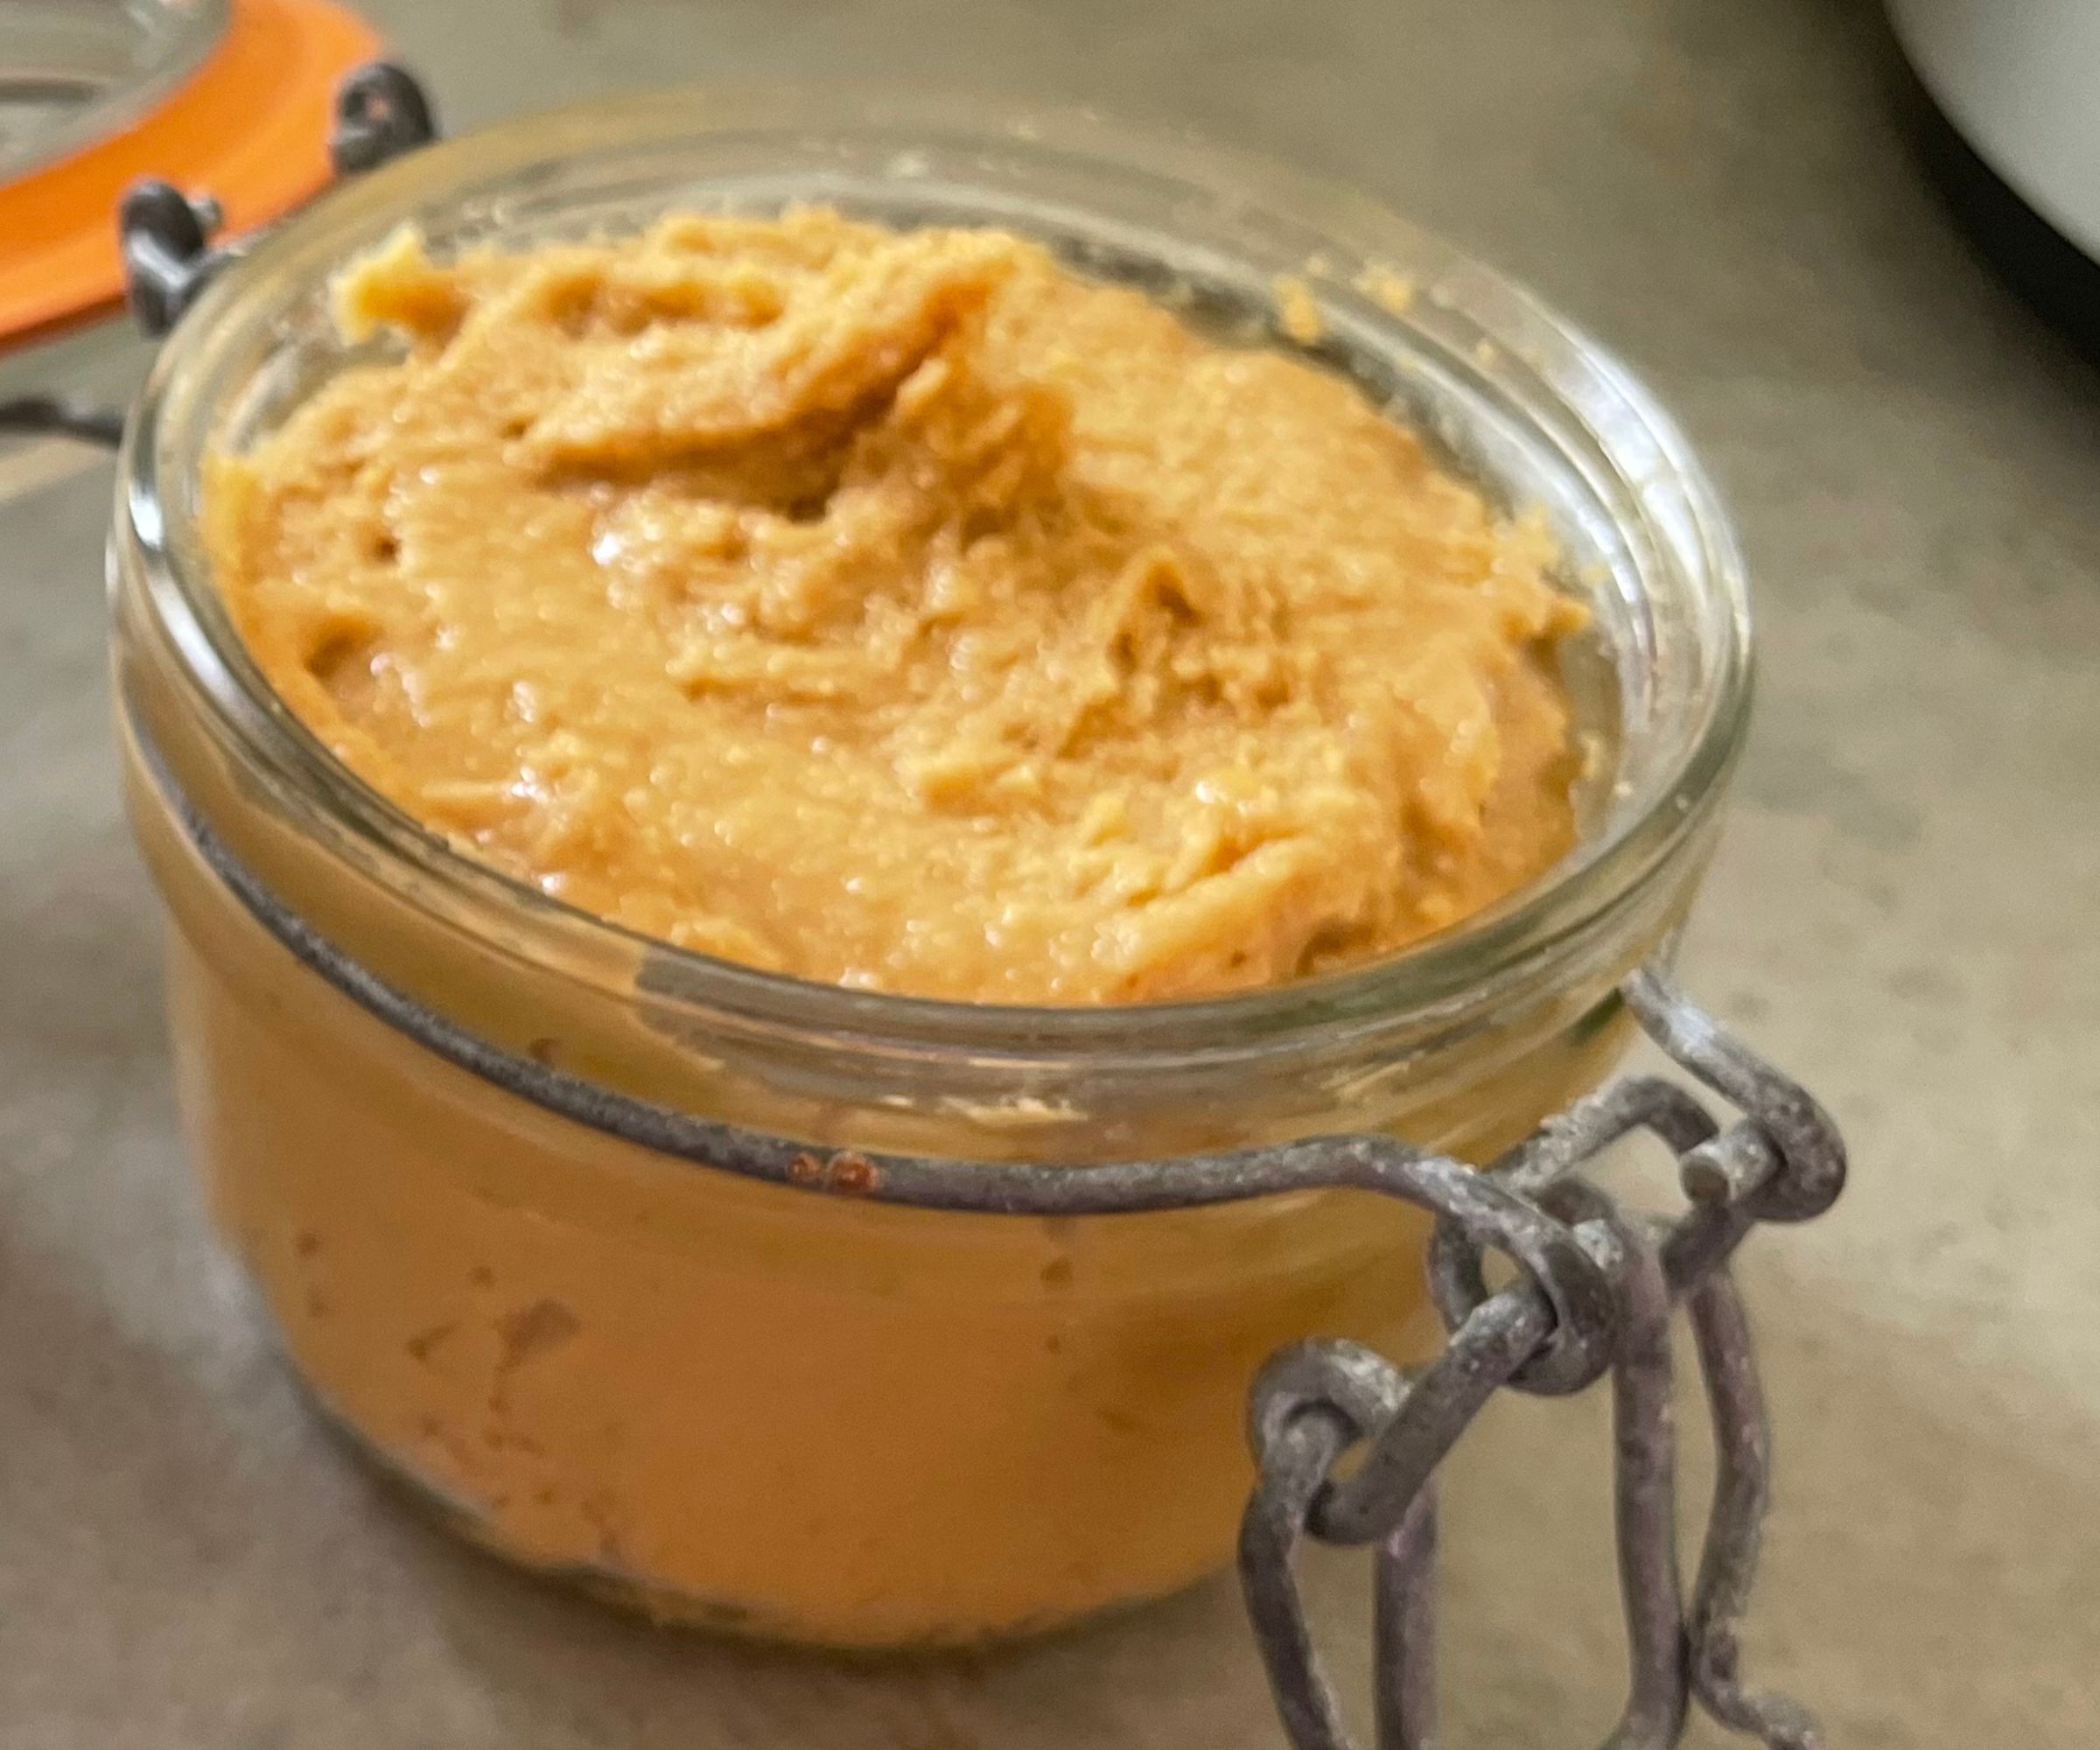 Peanut butter made in the Bamix immersion blender